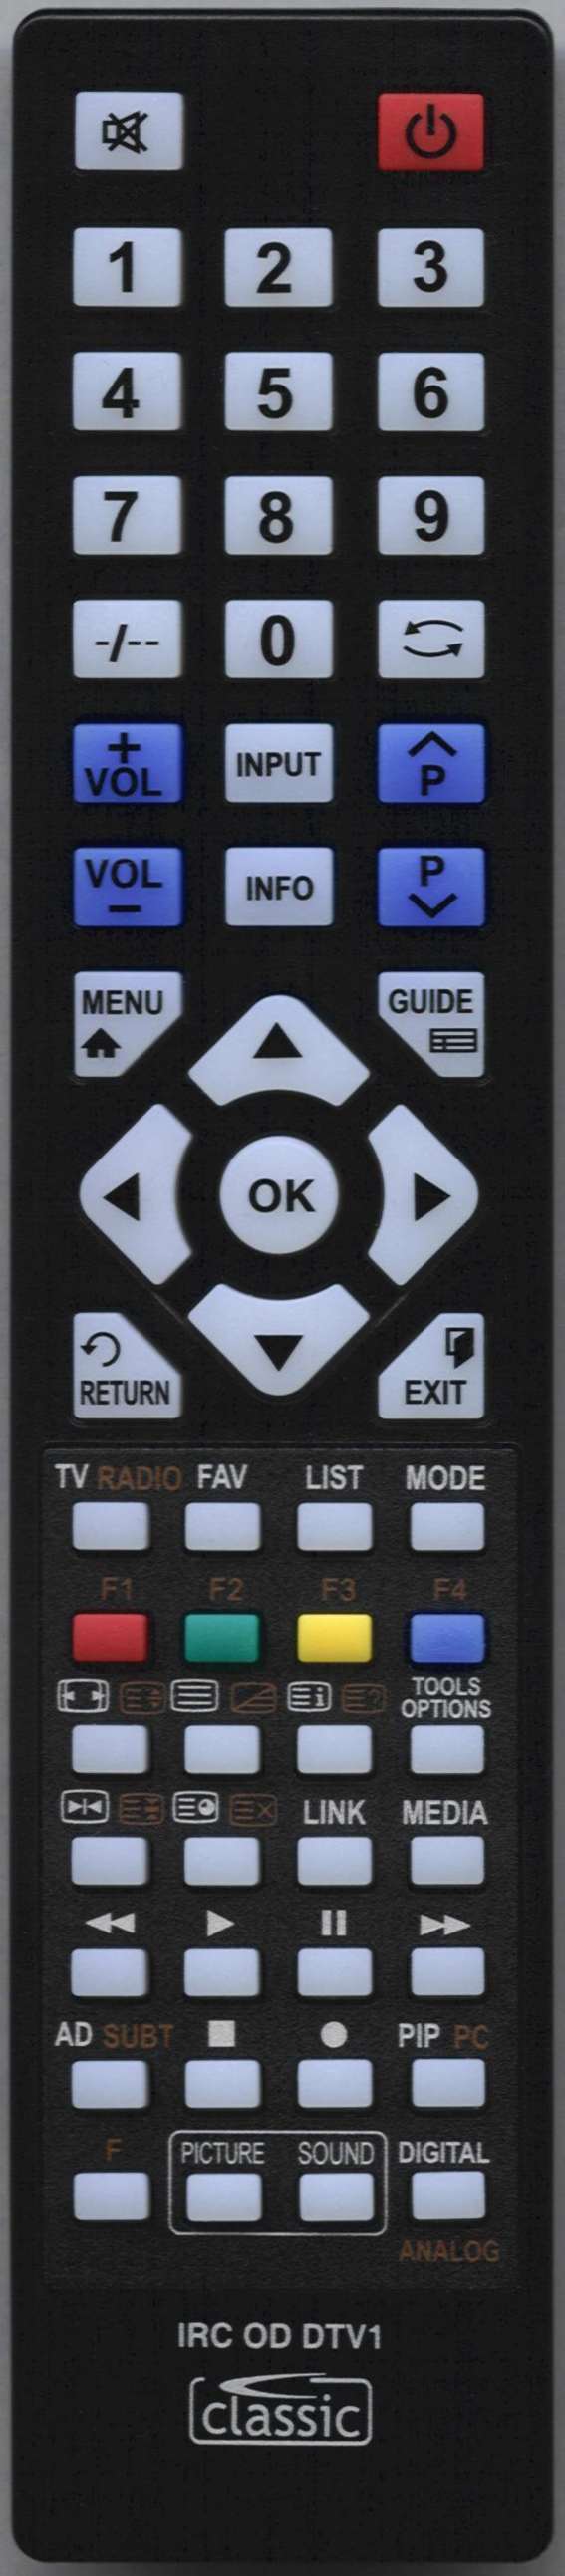 Samsung UE49KU6400UXZF Remote Control